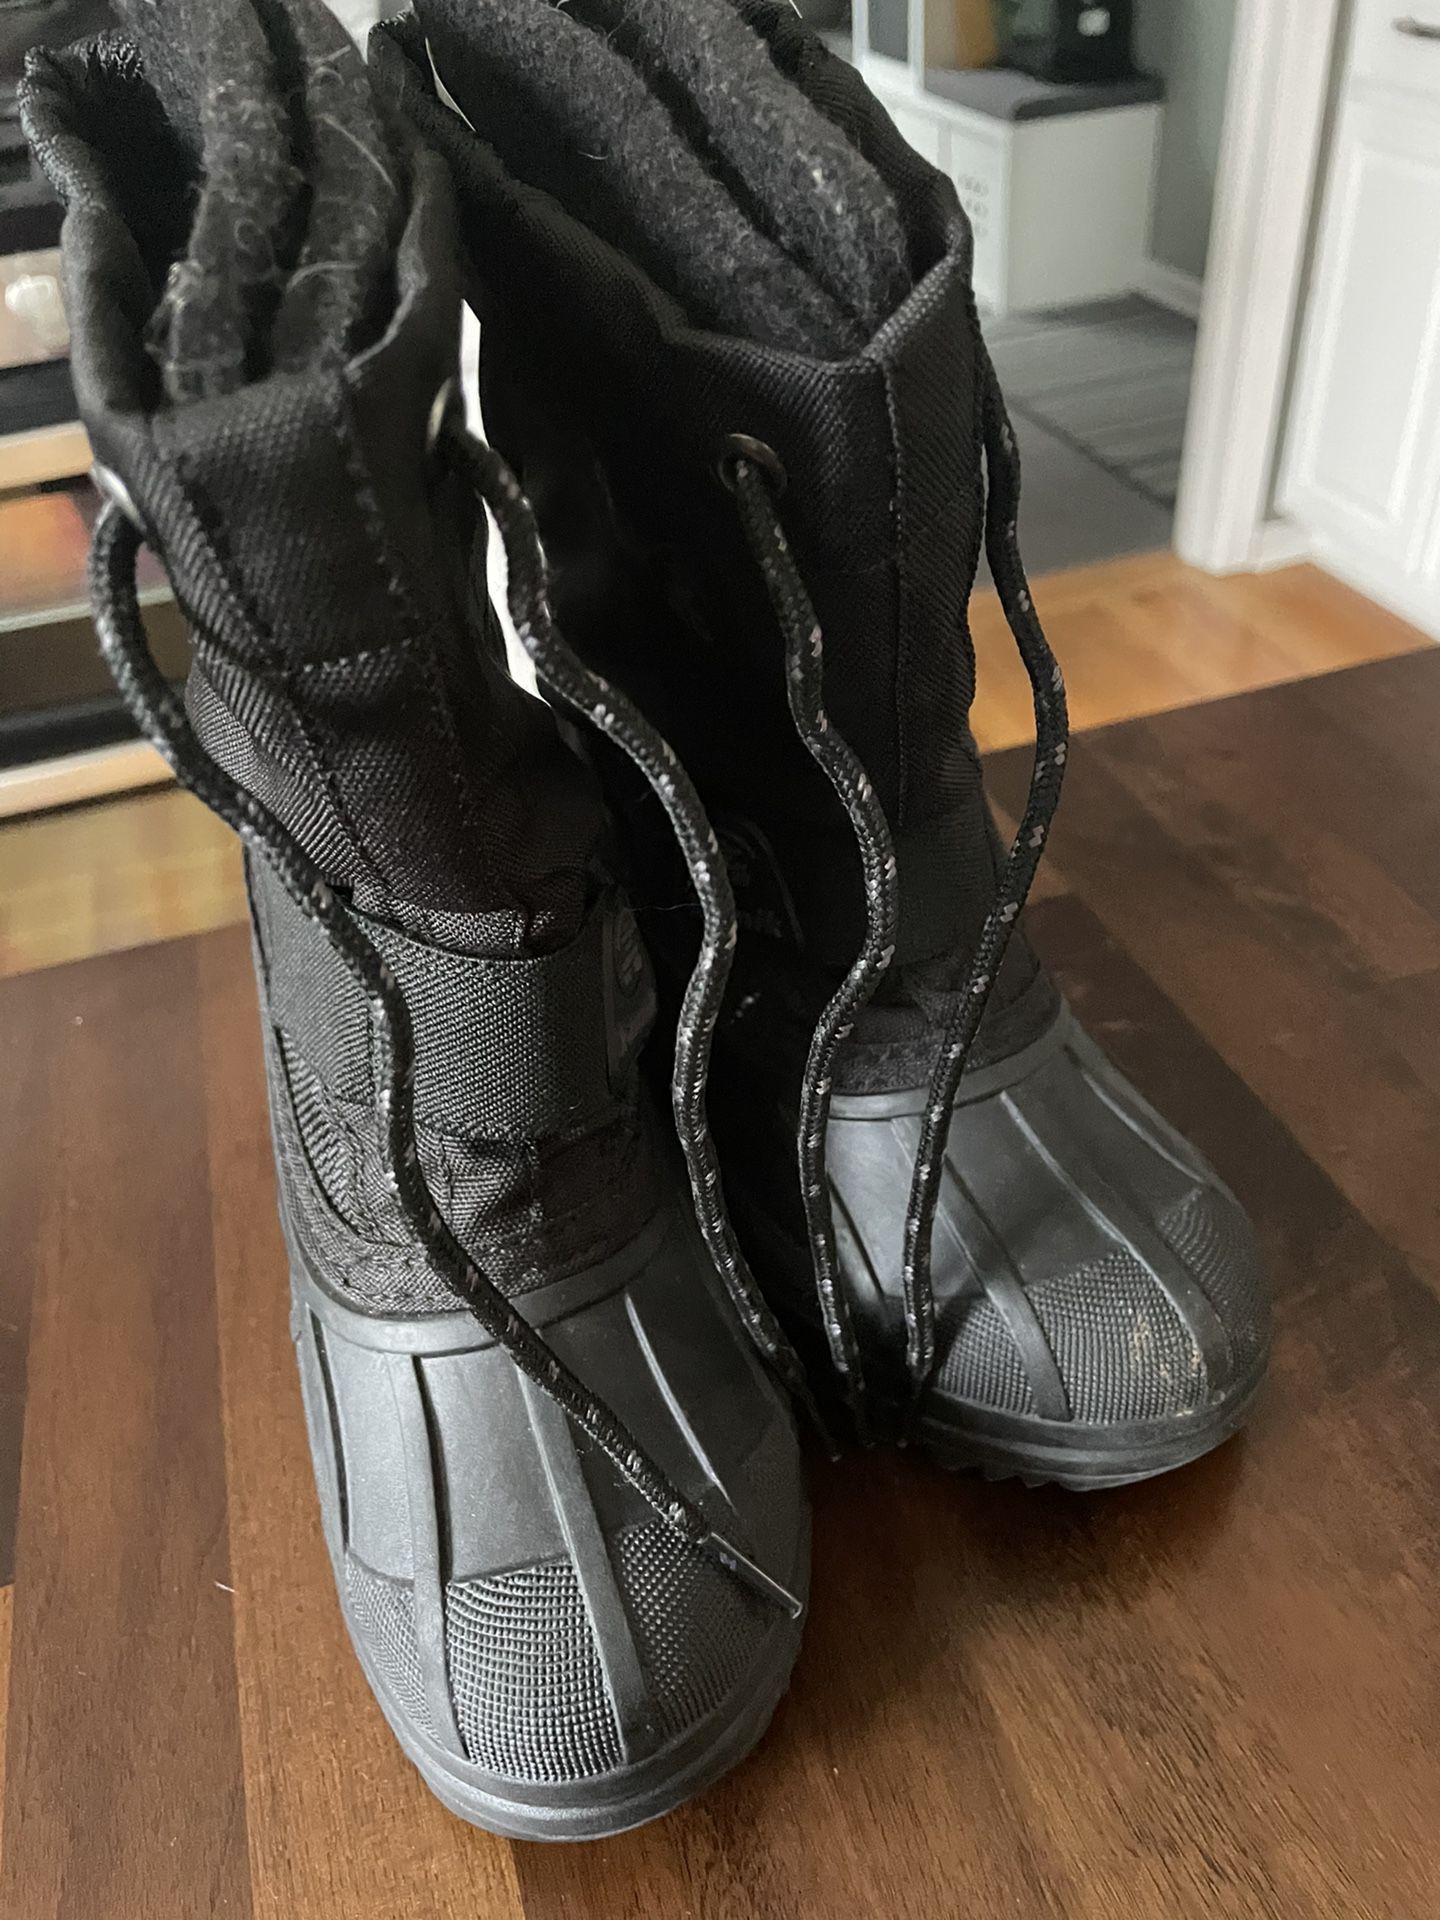 Boys Snow Boots Size 11